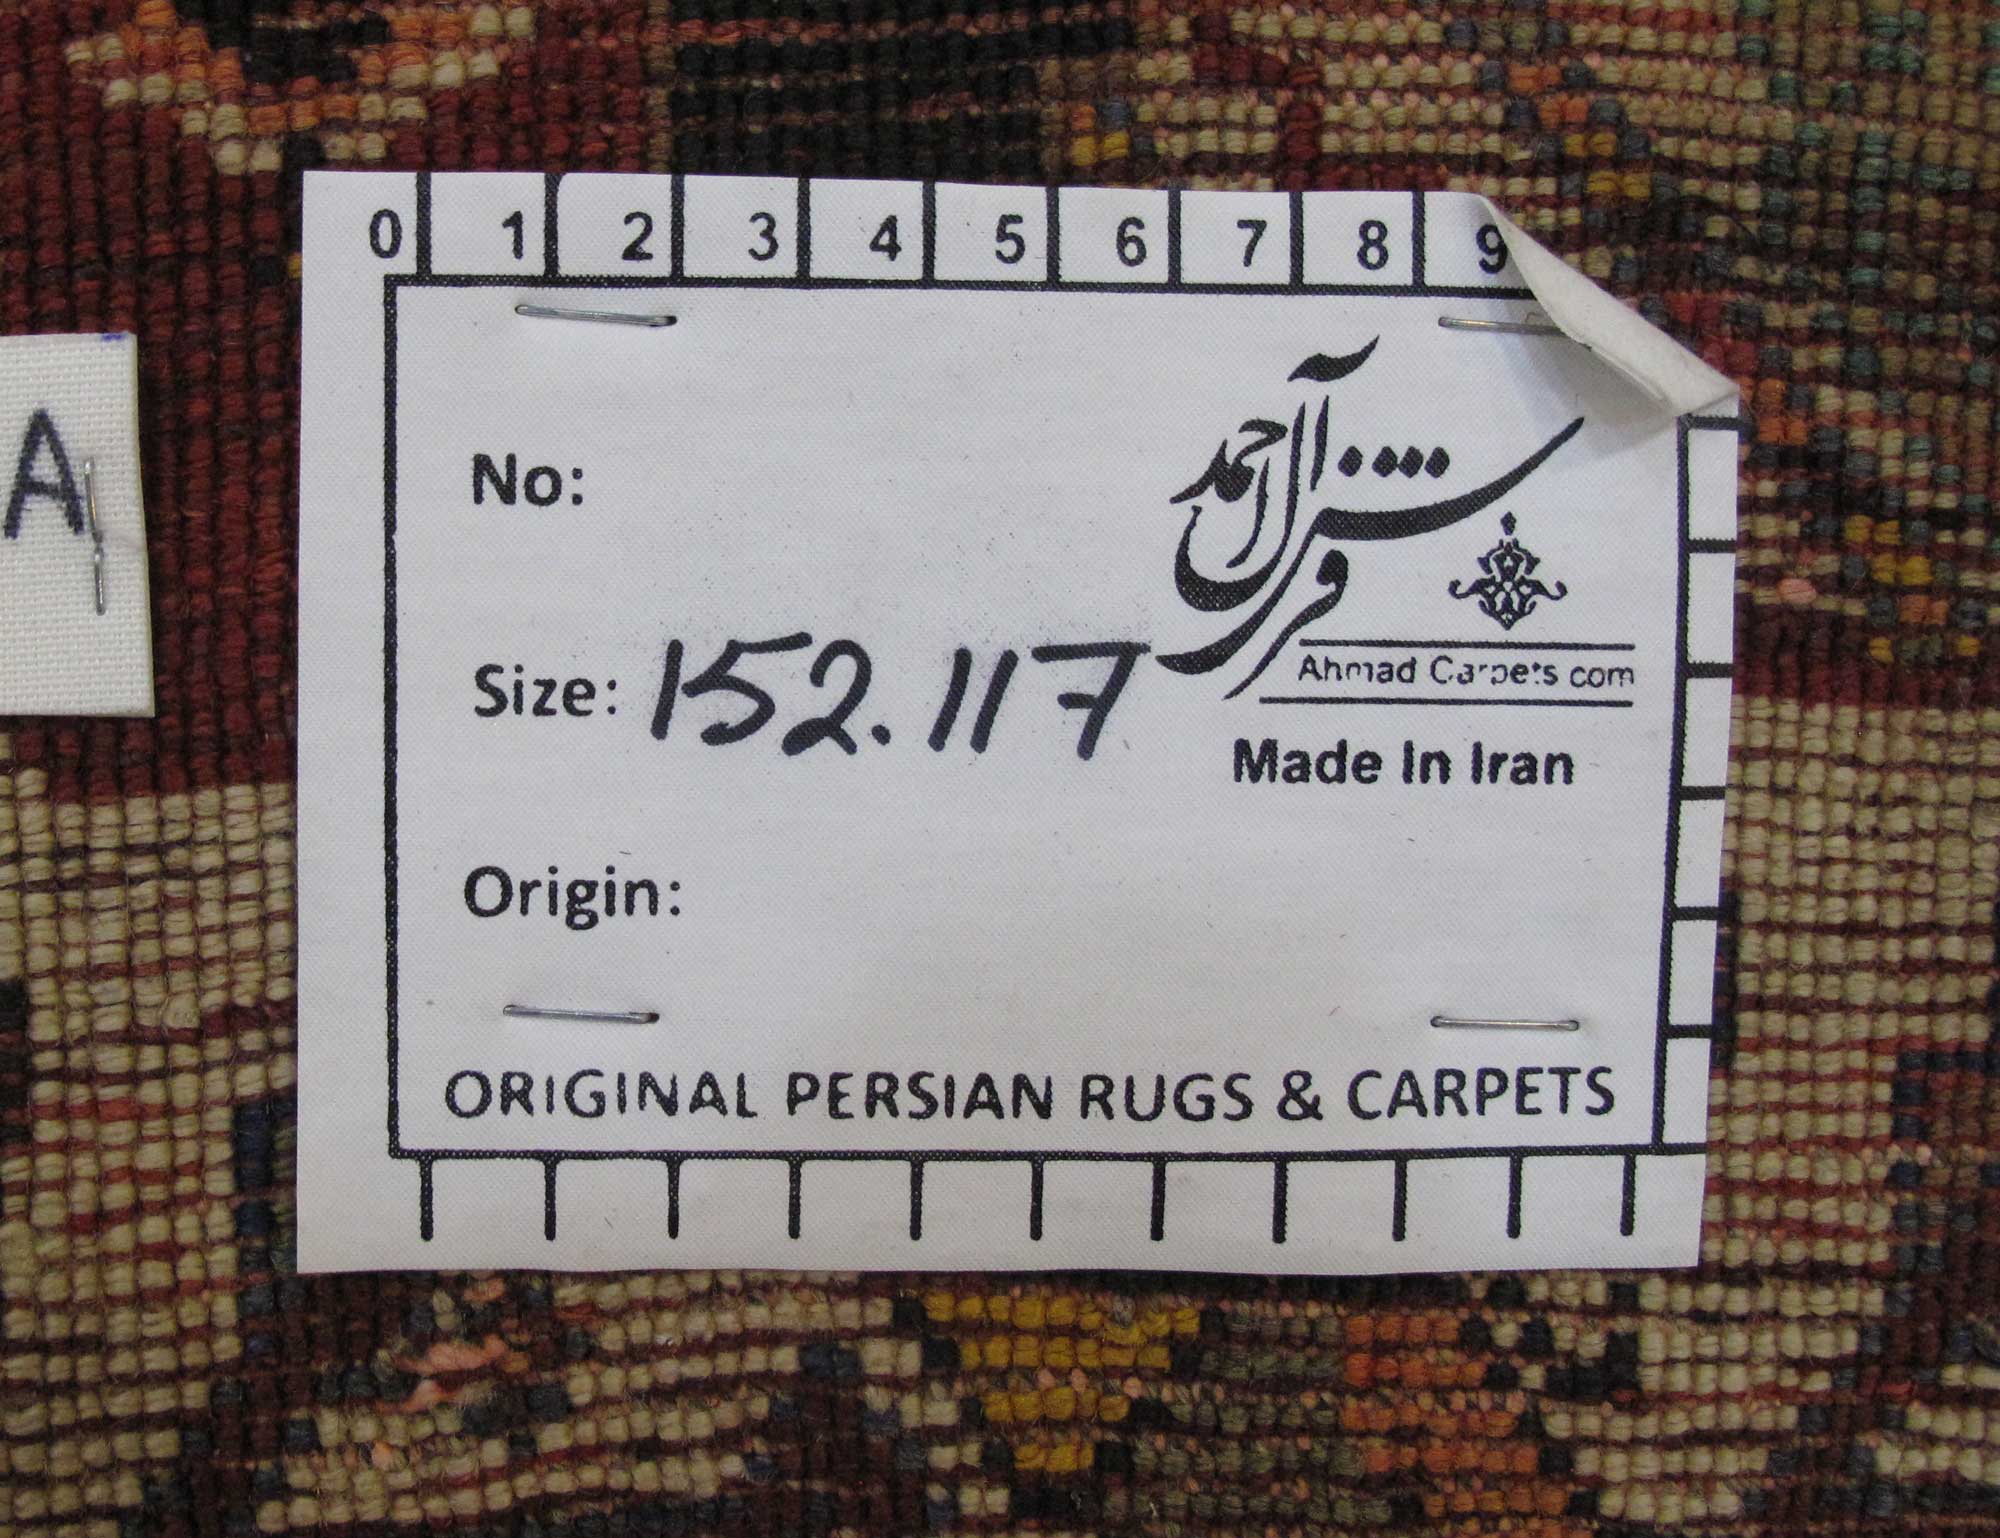 ۴۱۷۵۸ Shiraz 152×117 PP